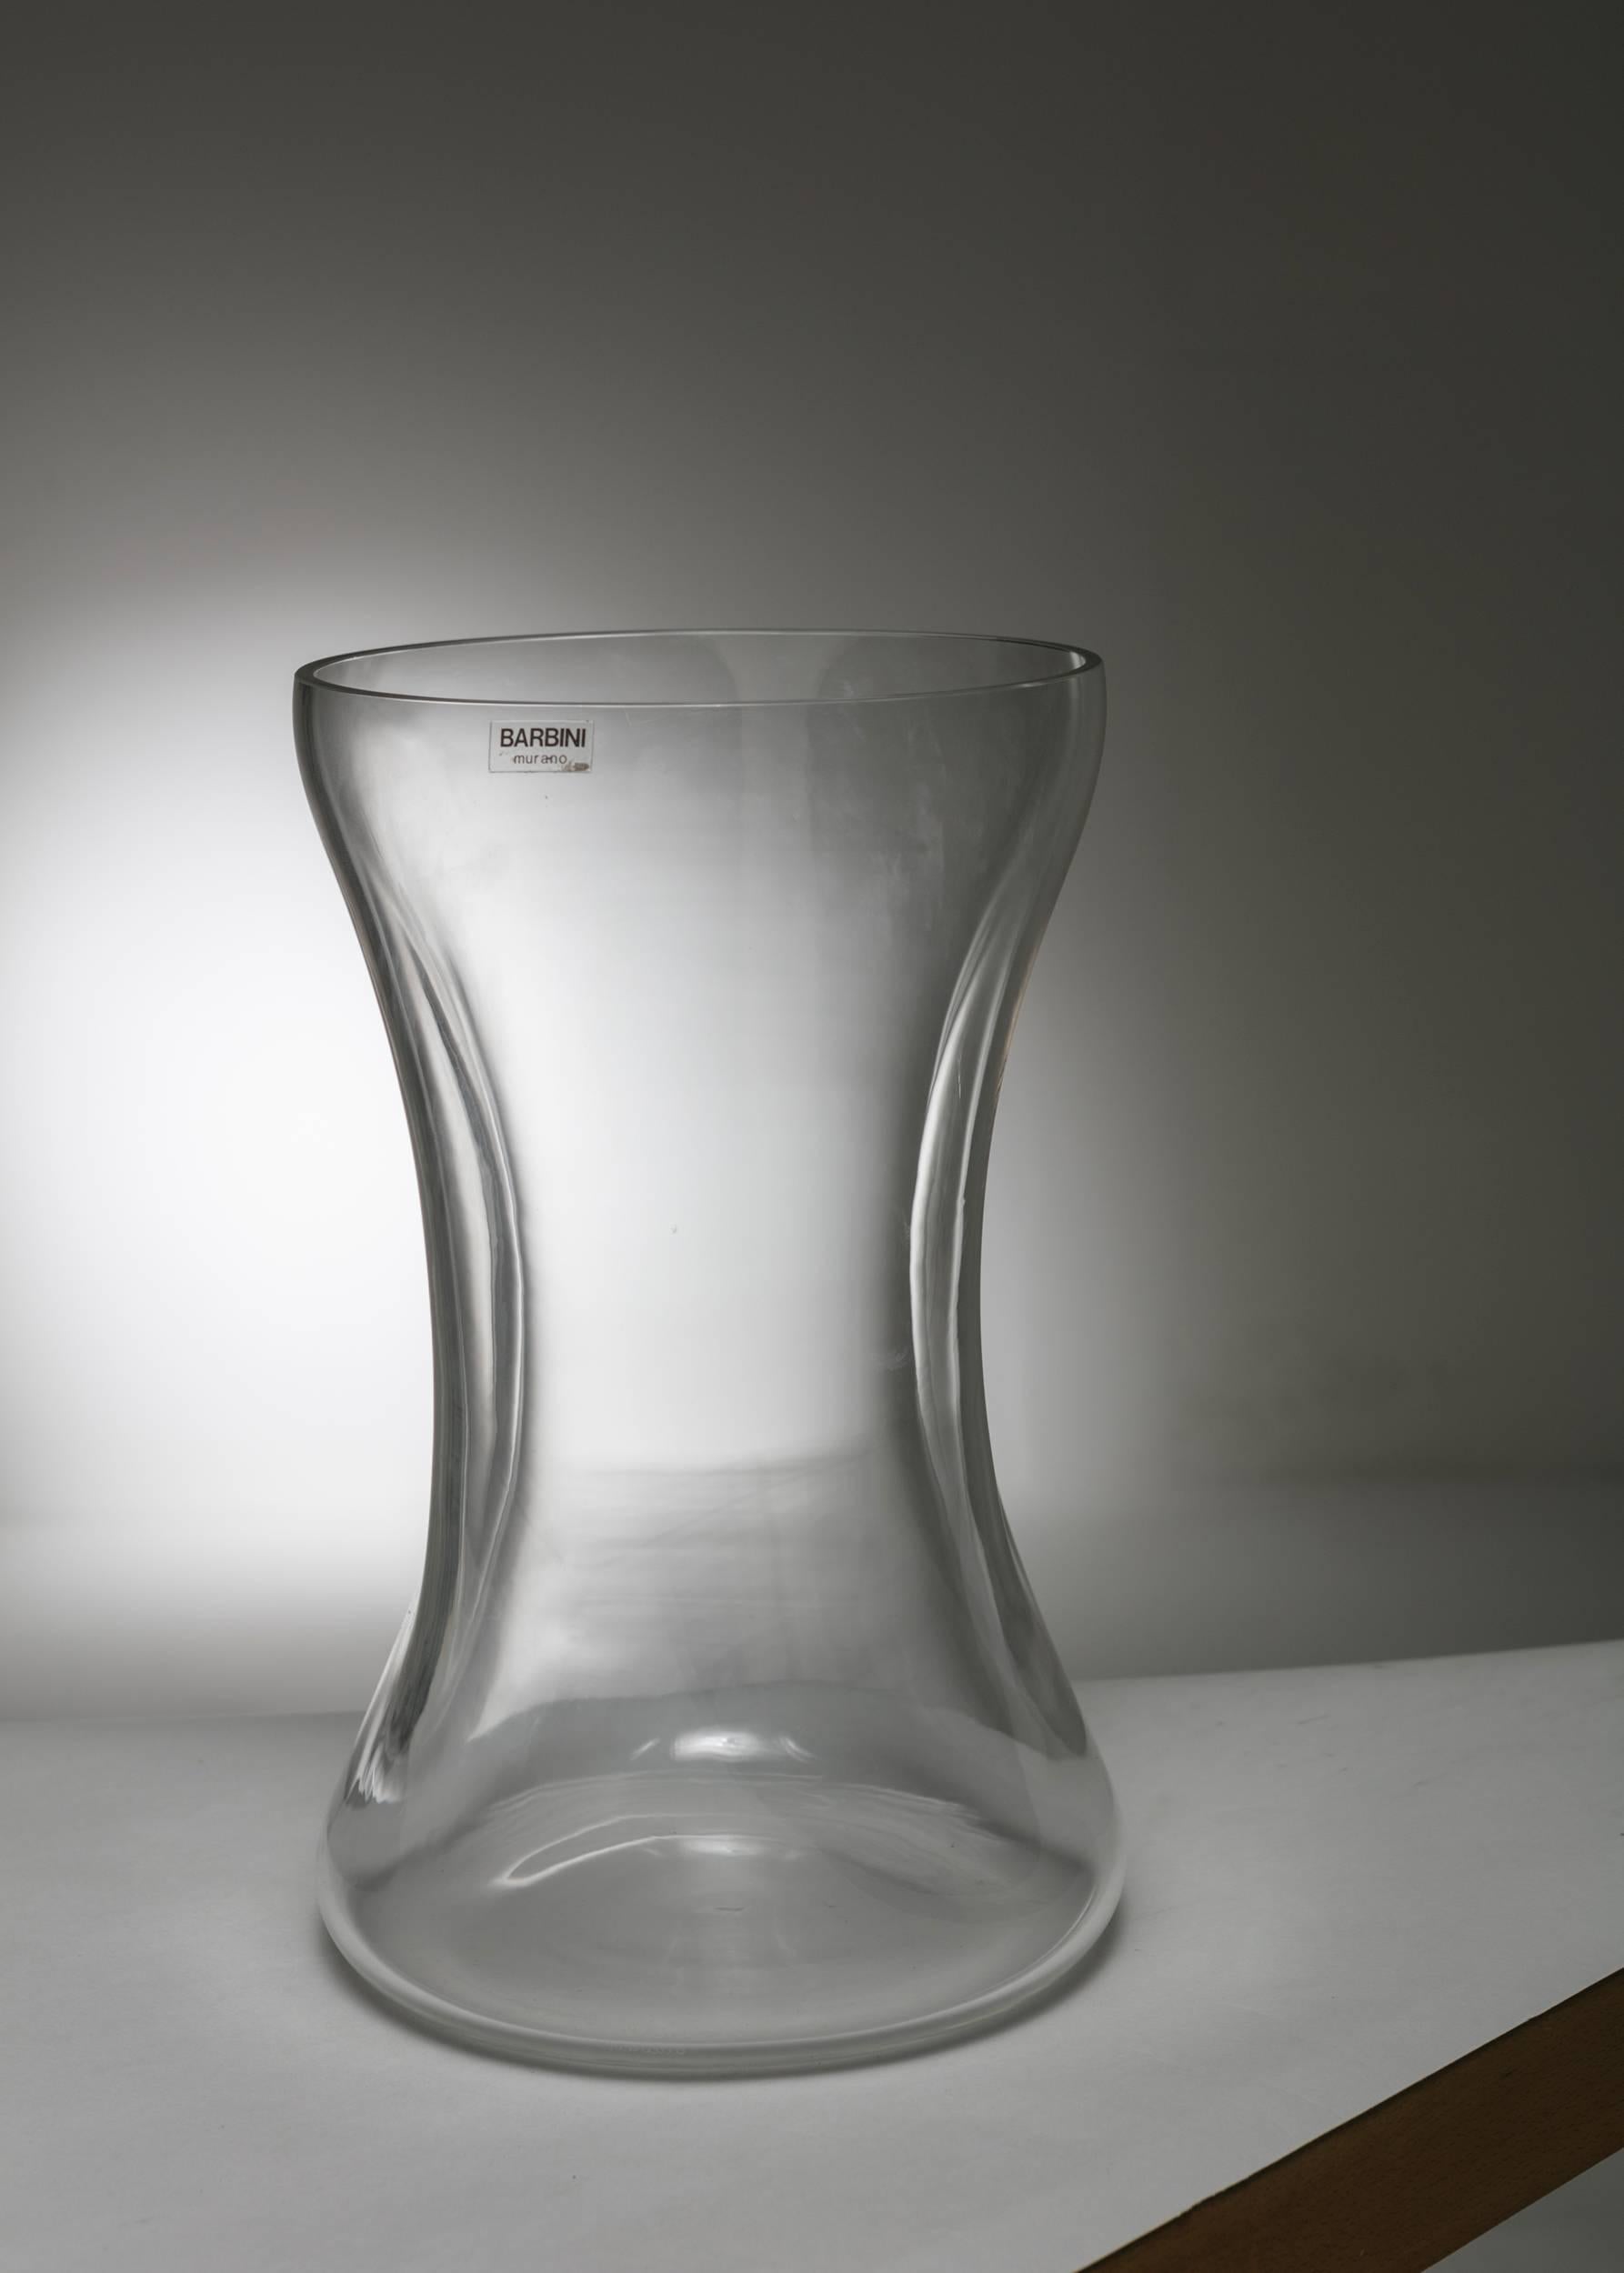 Remarkable piece by Barbini.
Asymmetrical vetro sonoro piece.